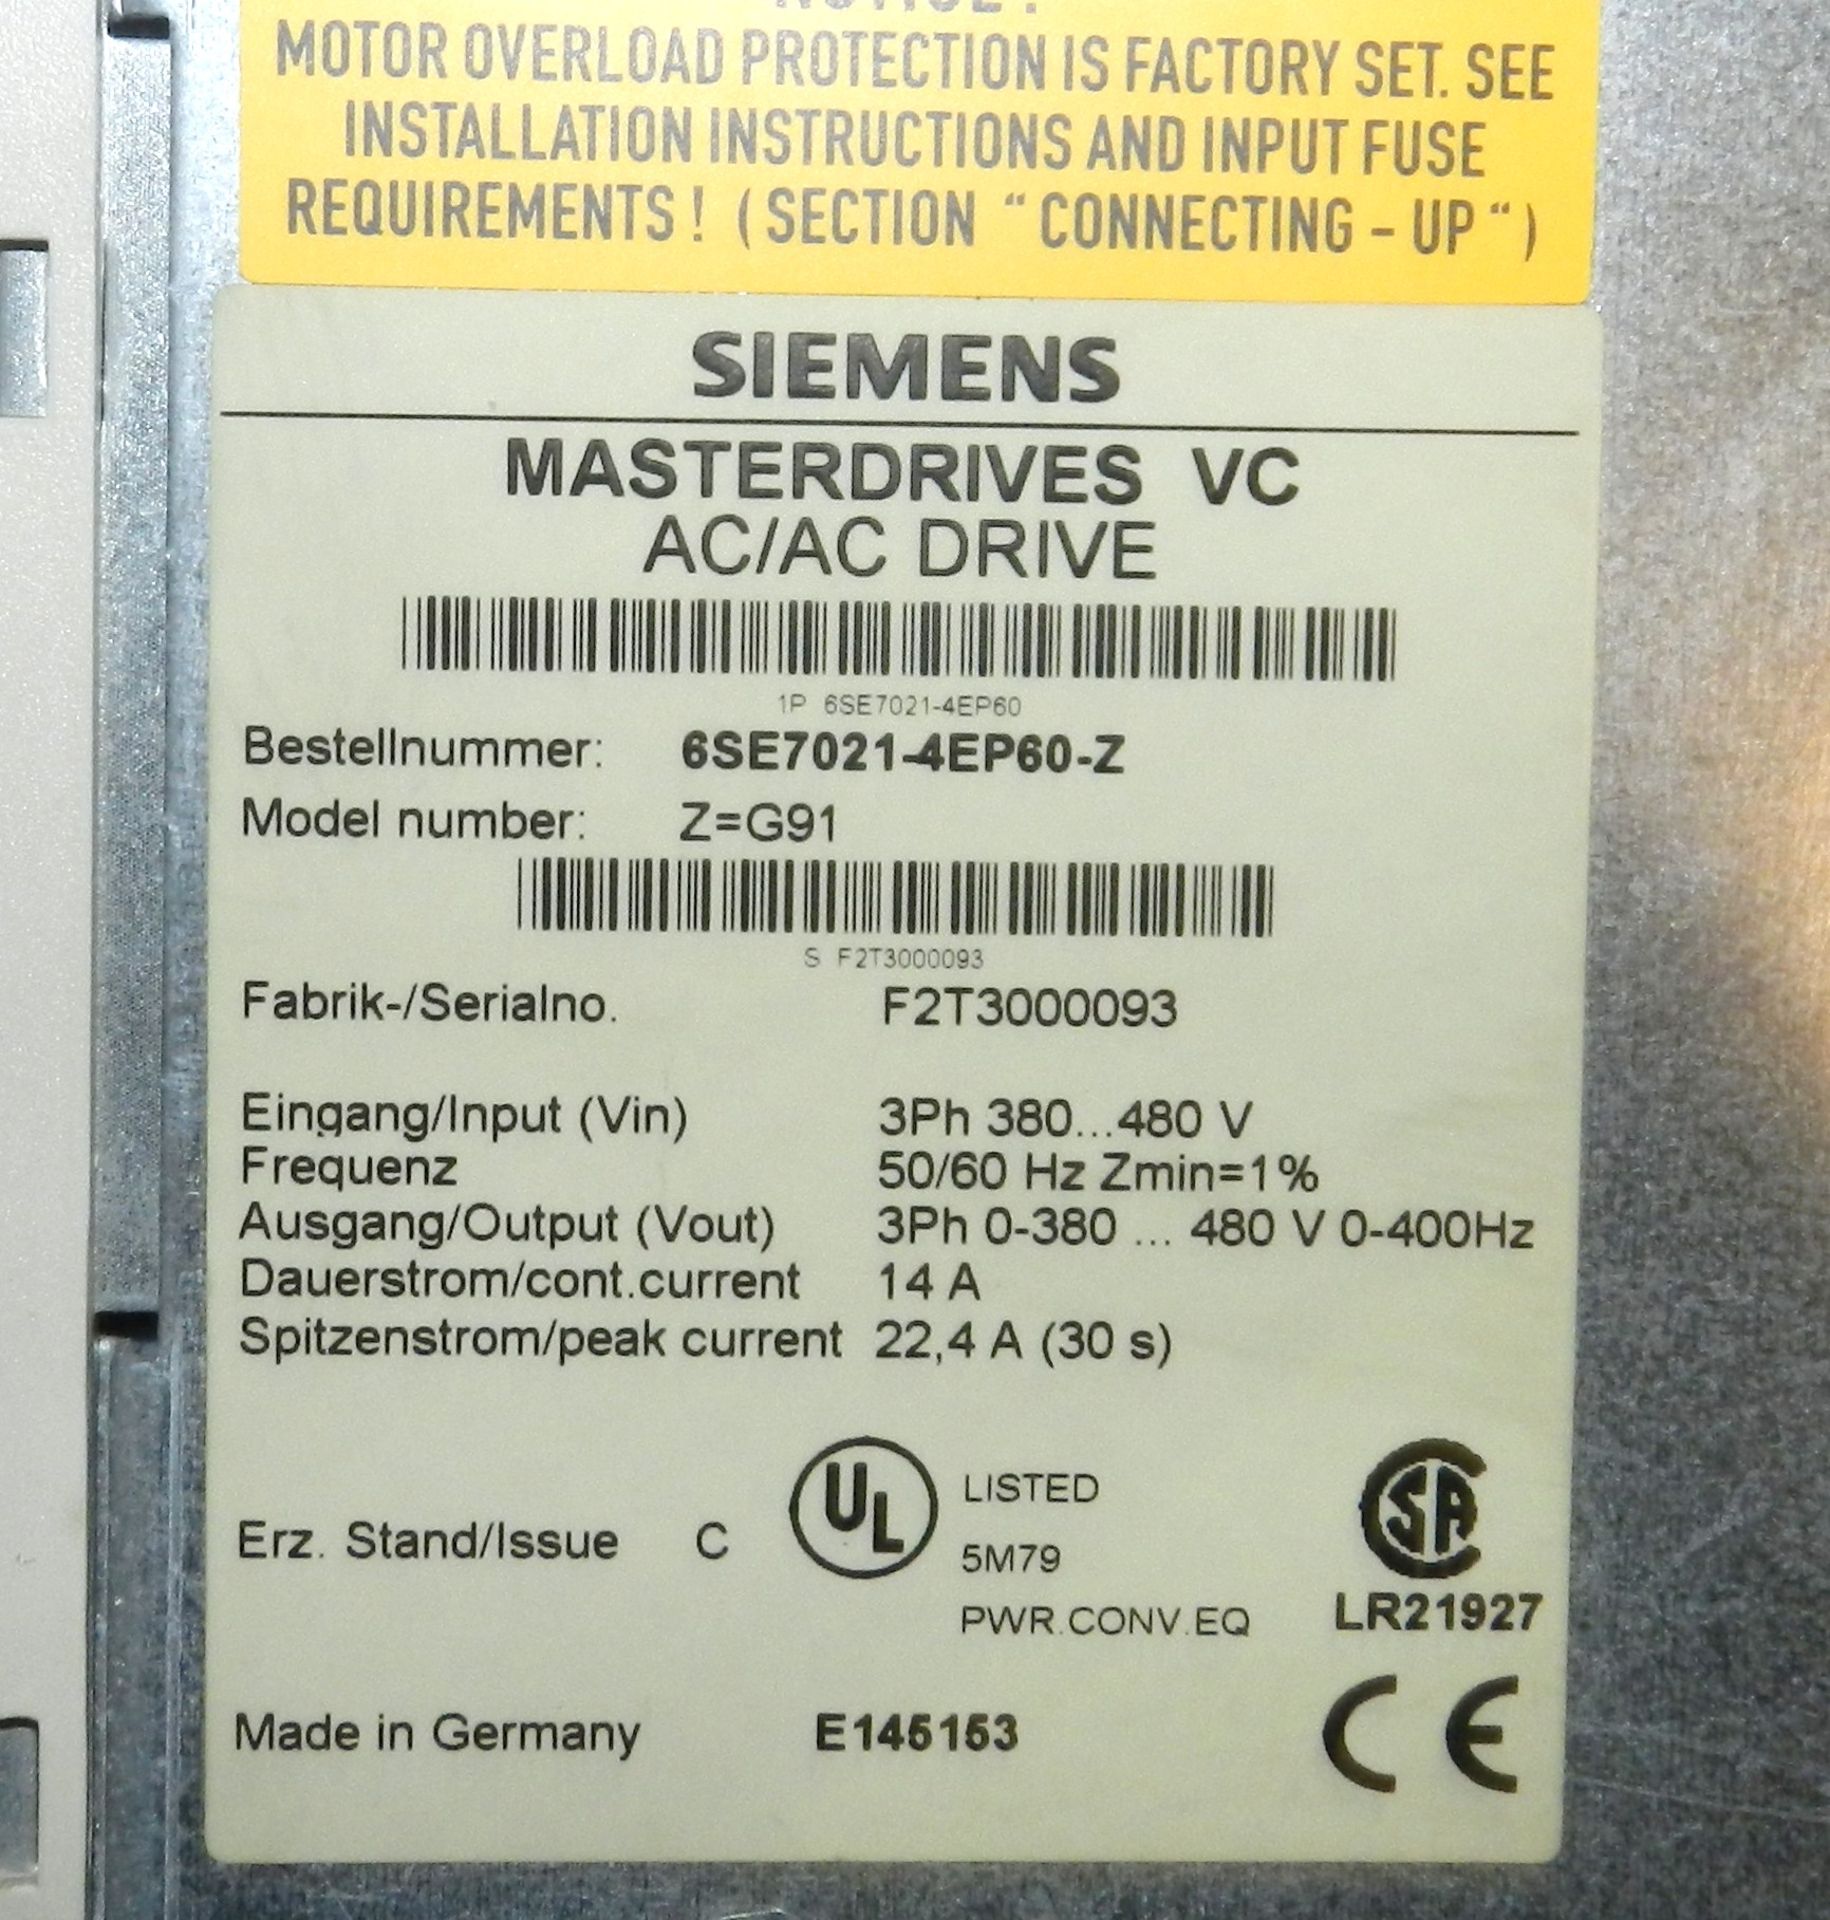 Siemens 6SE7021-4EP60-Z Z=G91 Masterdrives VC AC/AC Drive - Image 2 of 7